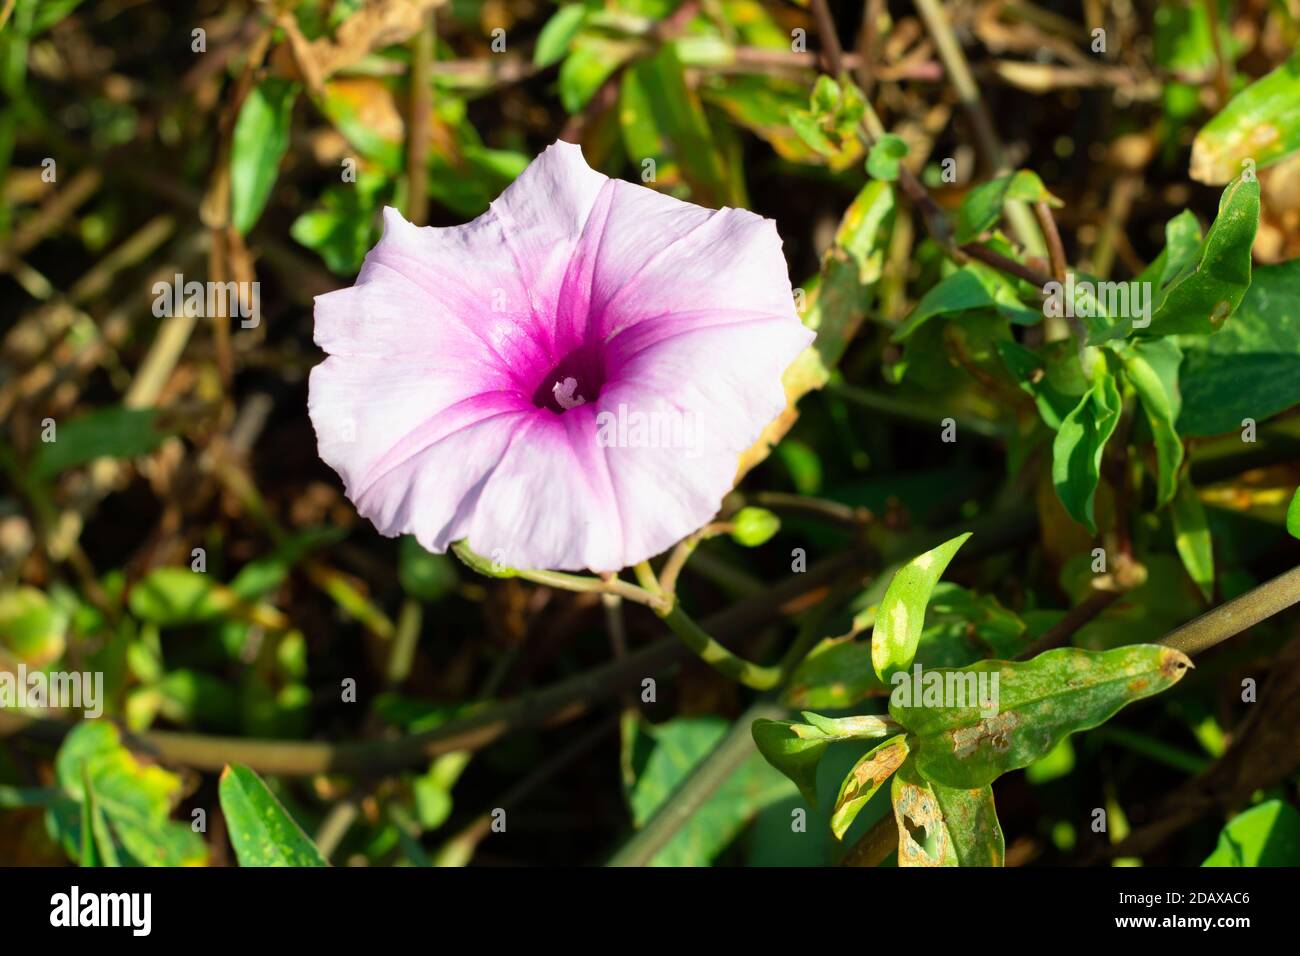 The Beautiful pink morning glory or Ipomoea carnea flower Stock Photo